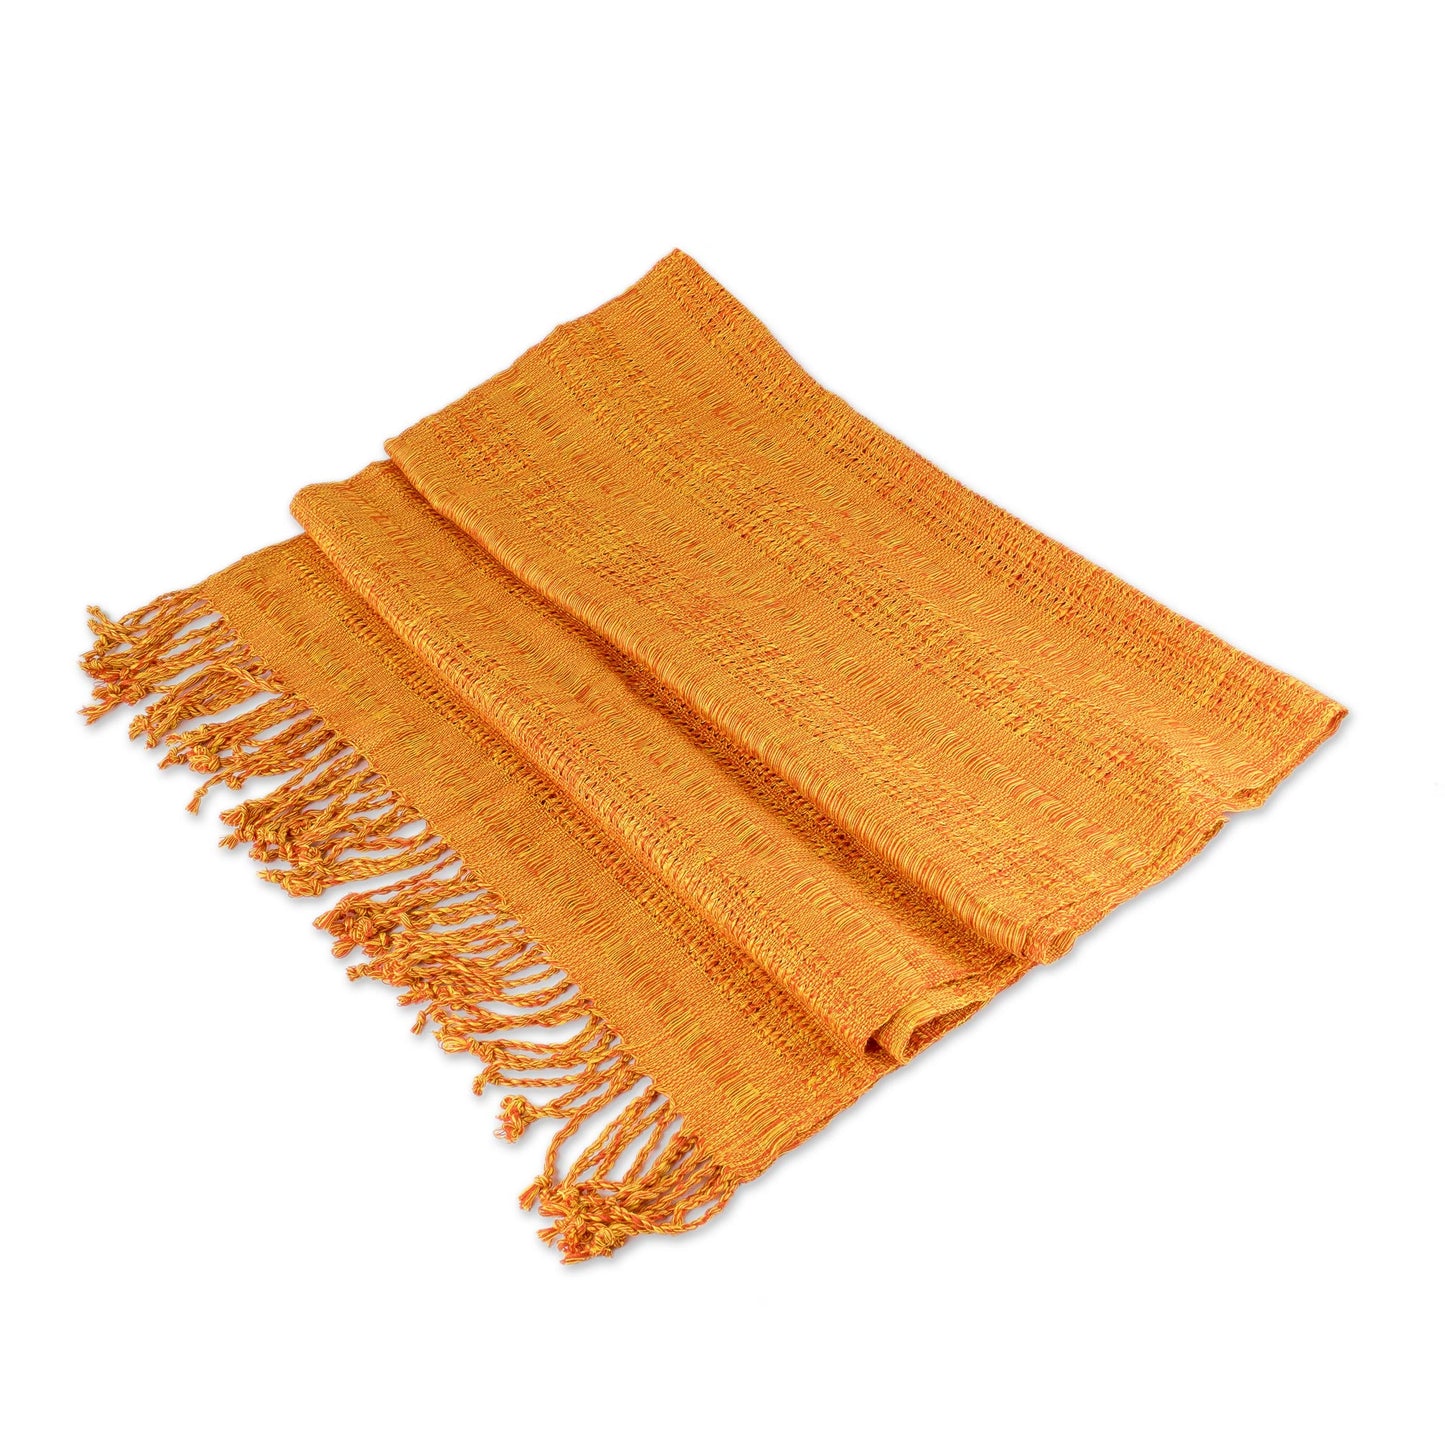 Textured Tangerine Guatemala Backstrap Handwoven Yellow-Orange Rayon Shawl